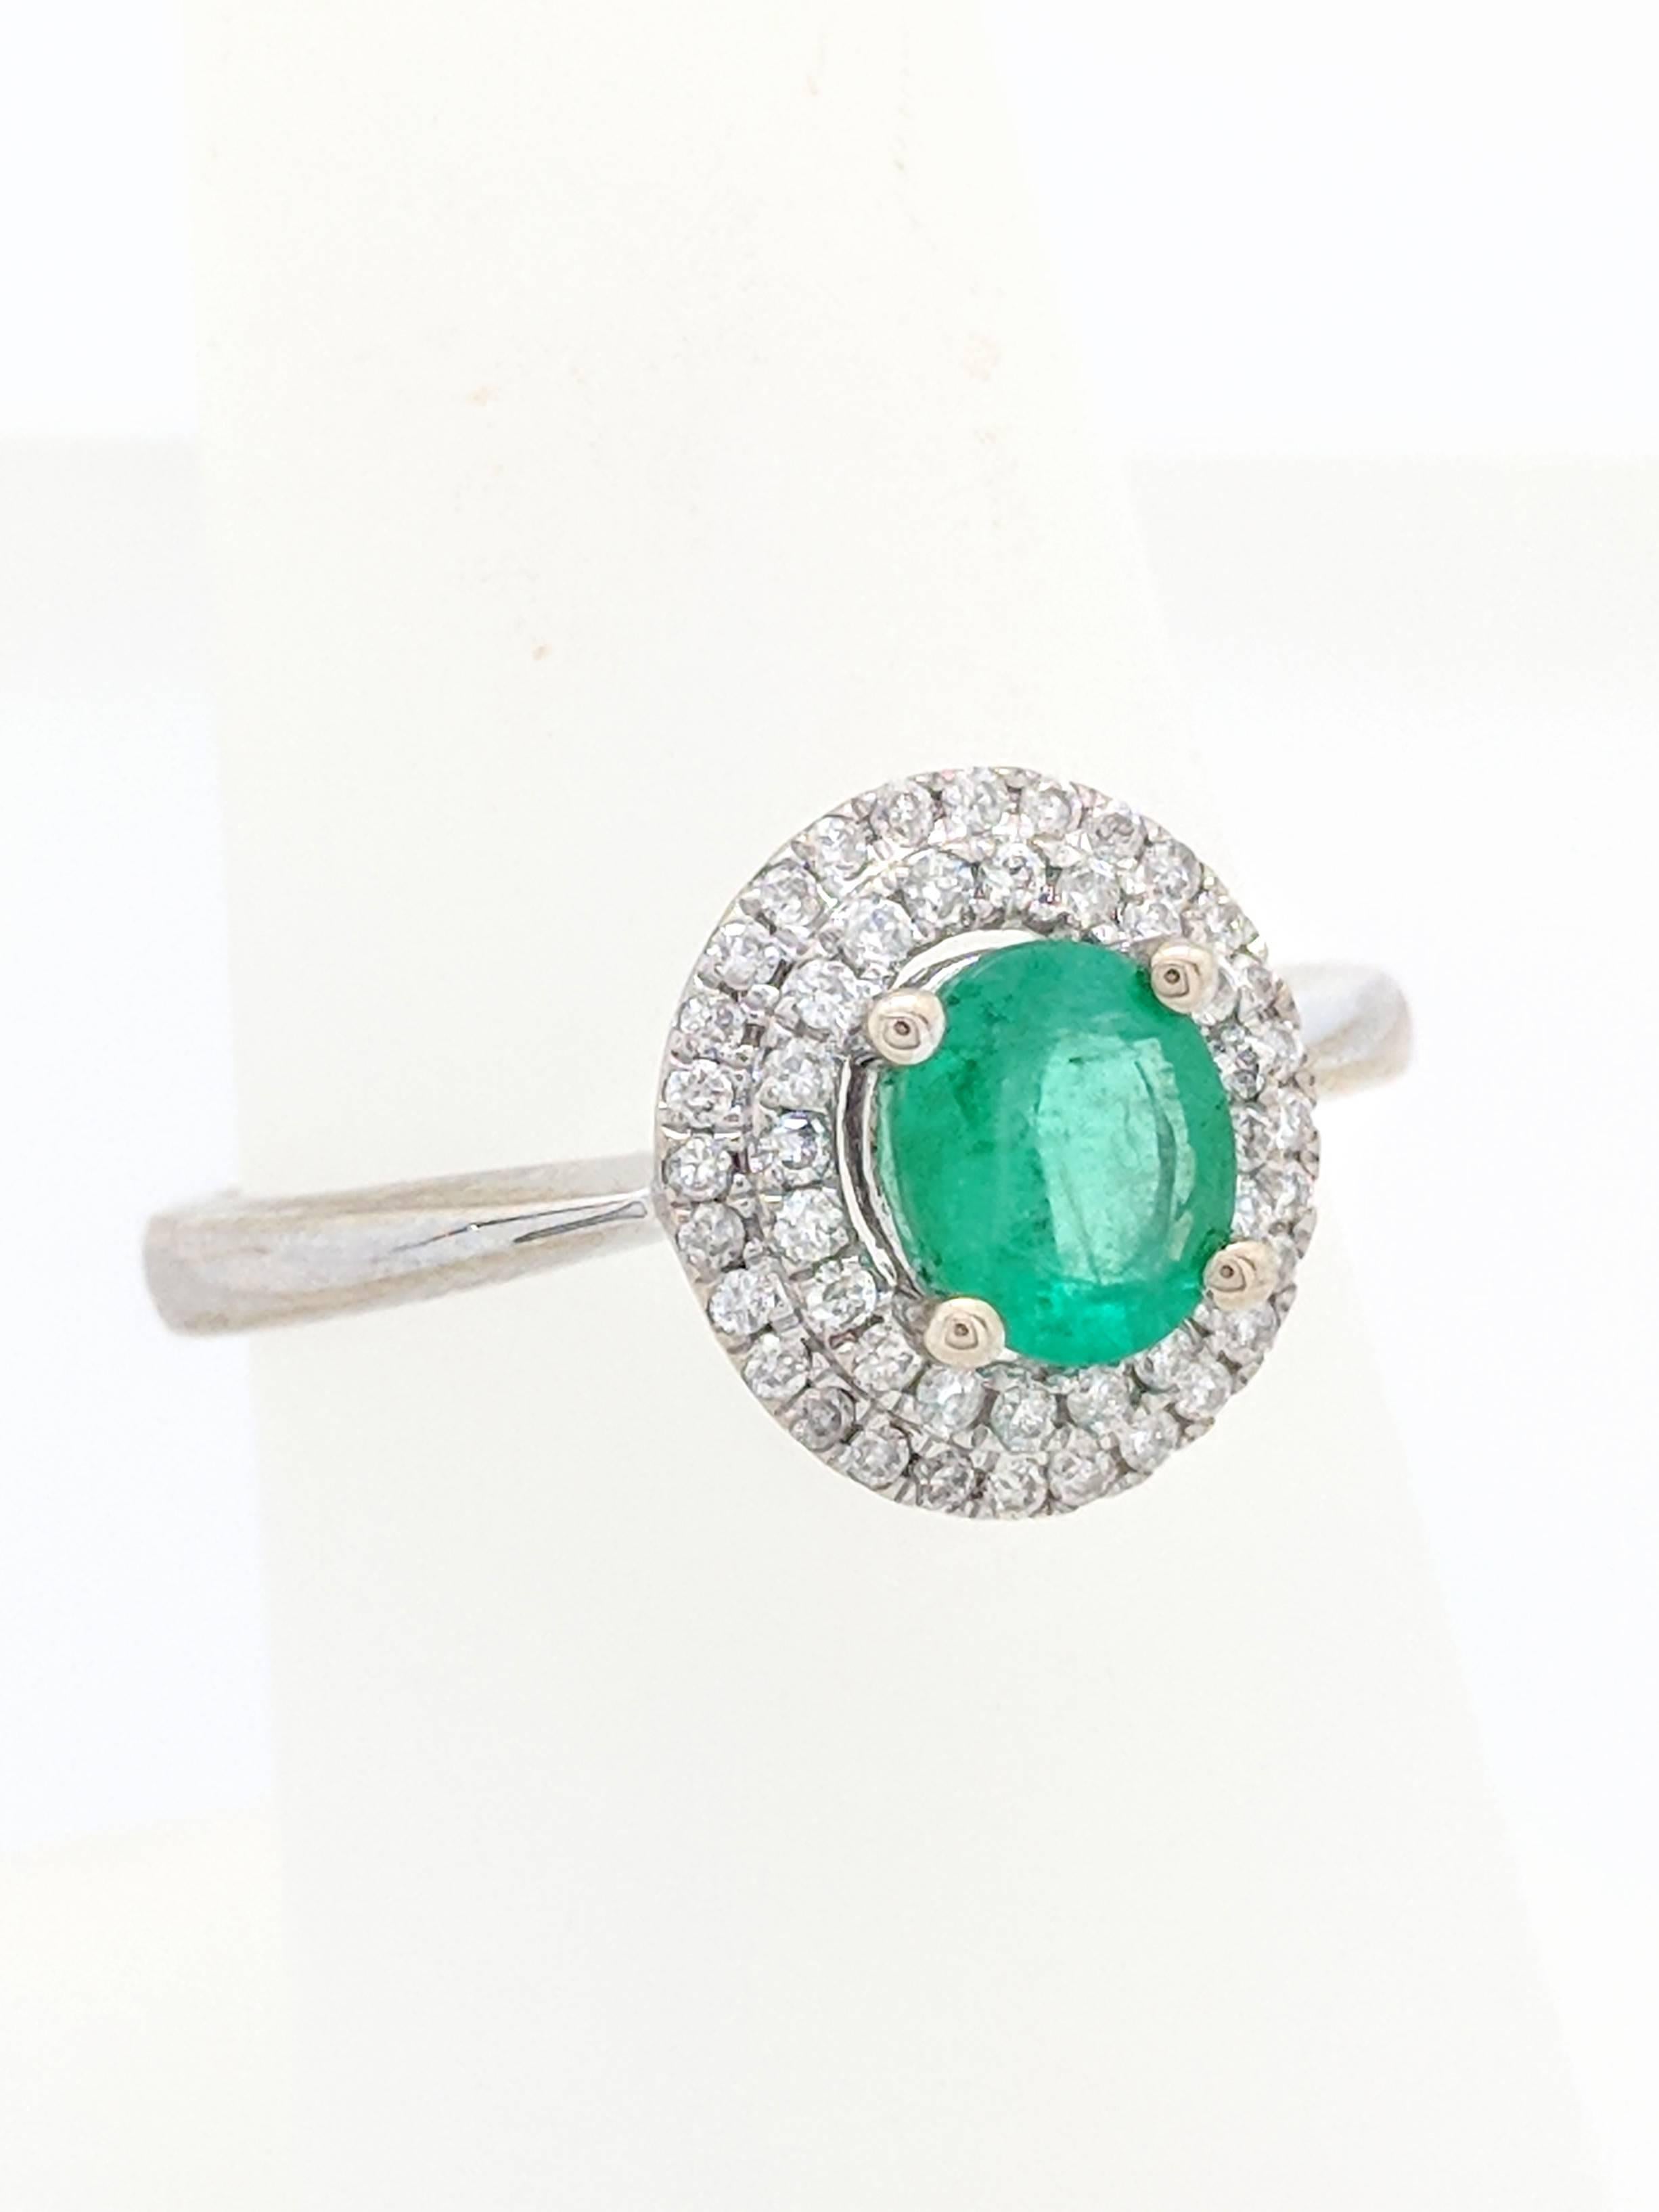 1 carat emerald diamond